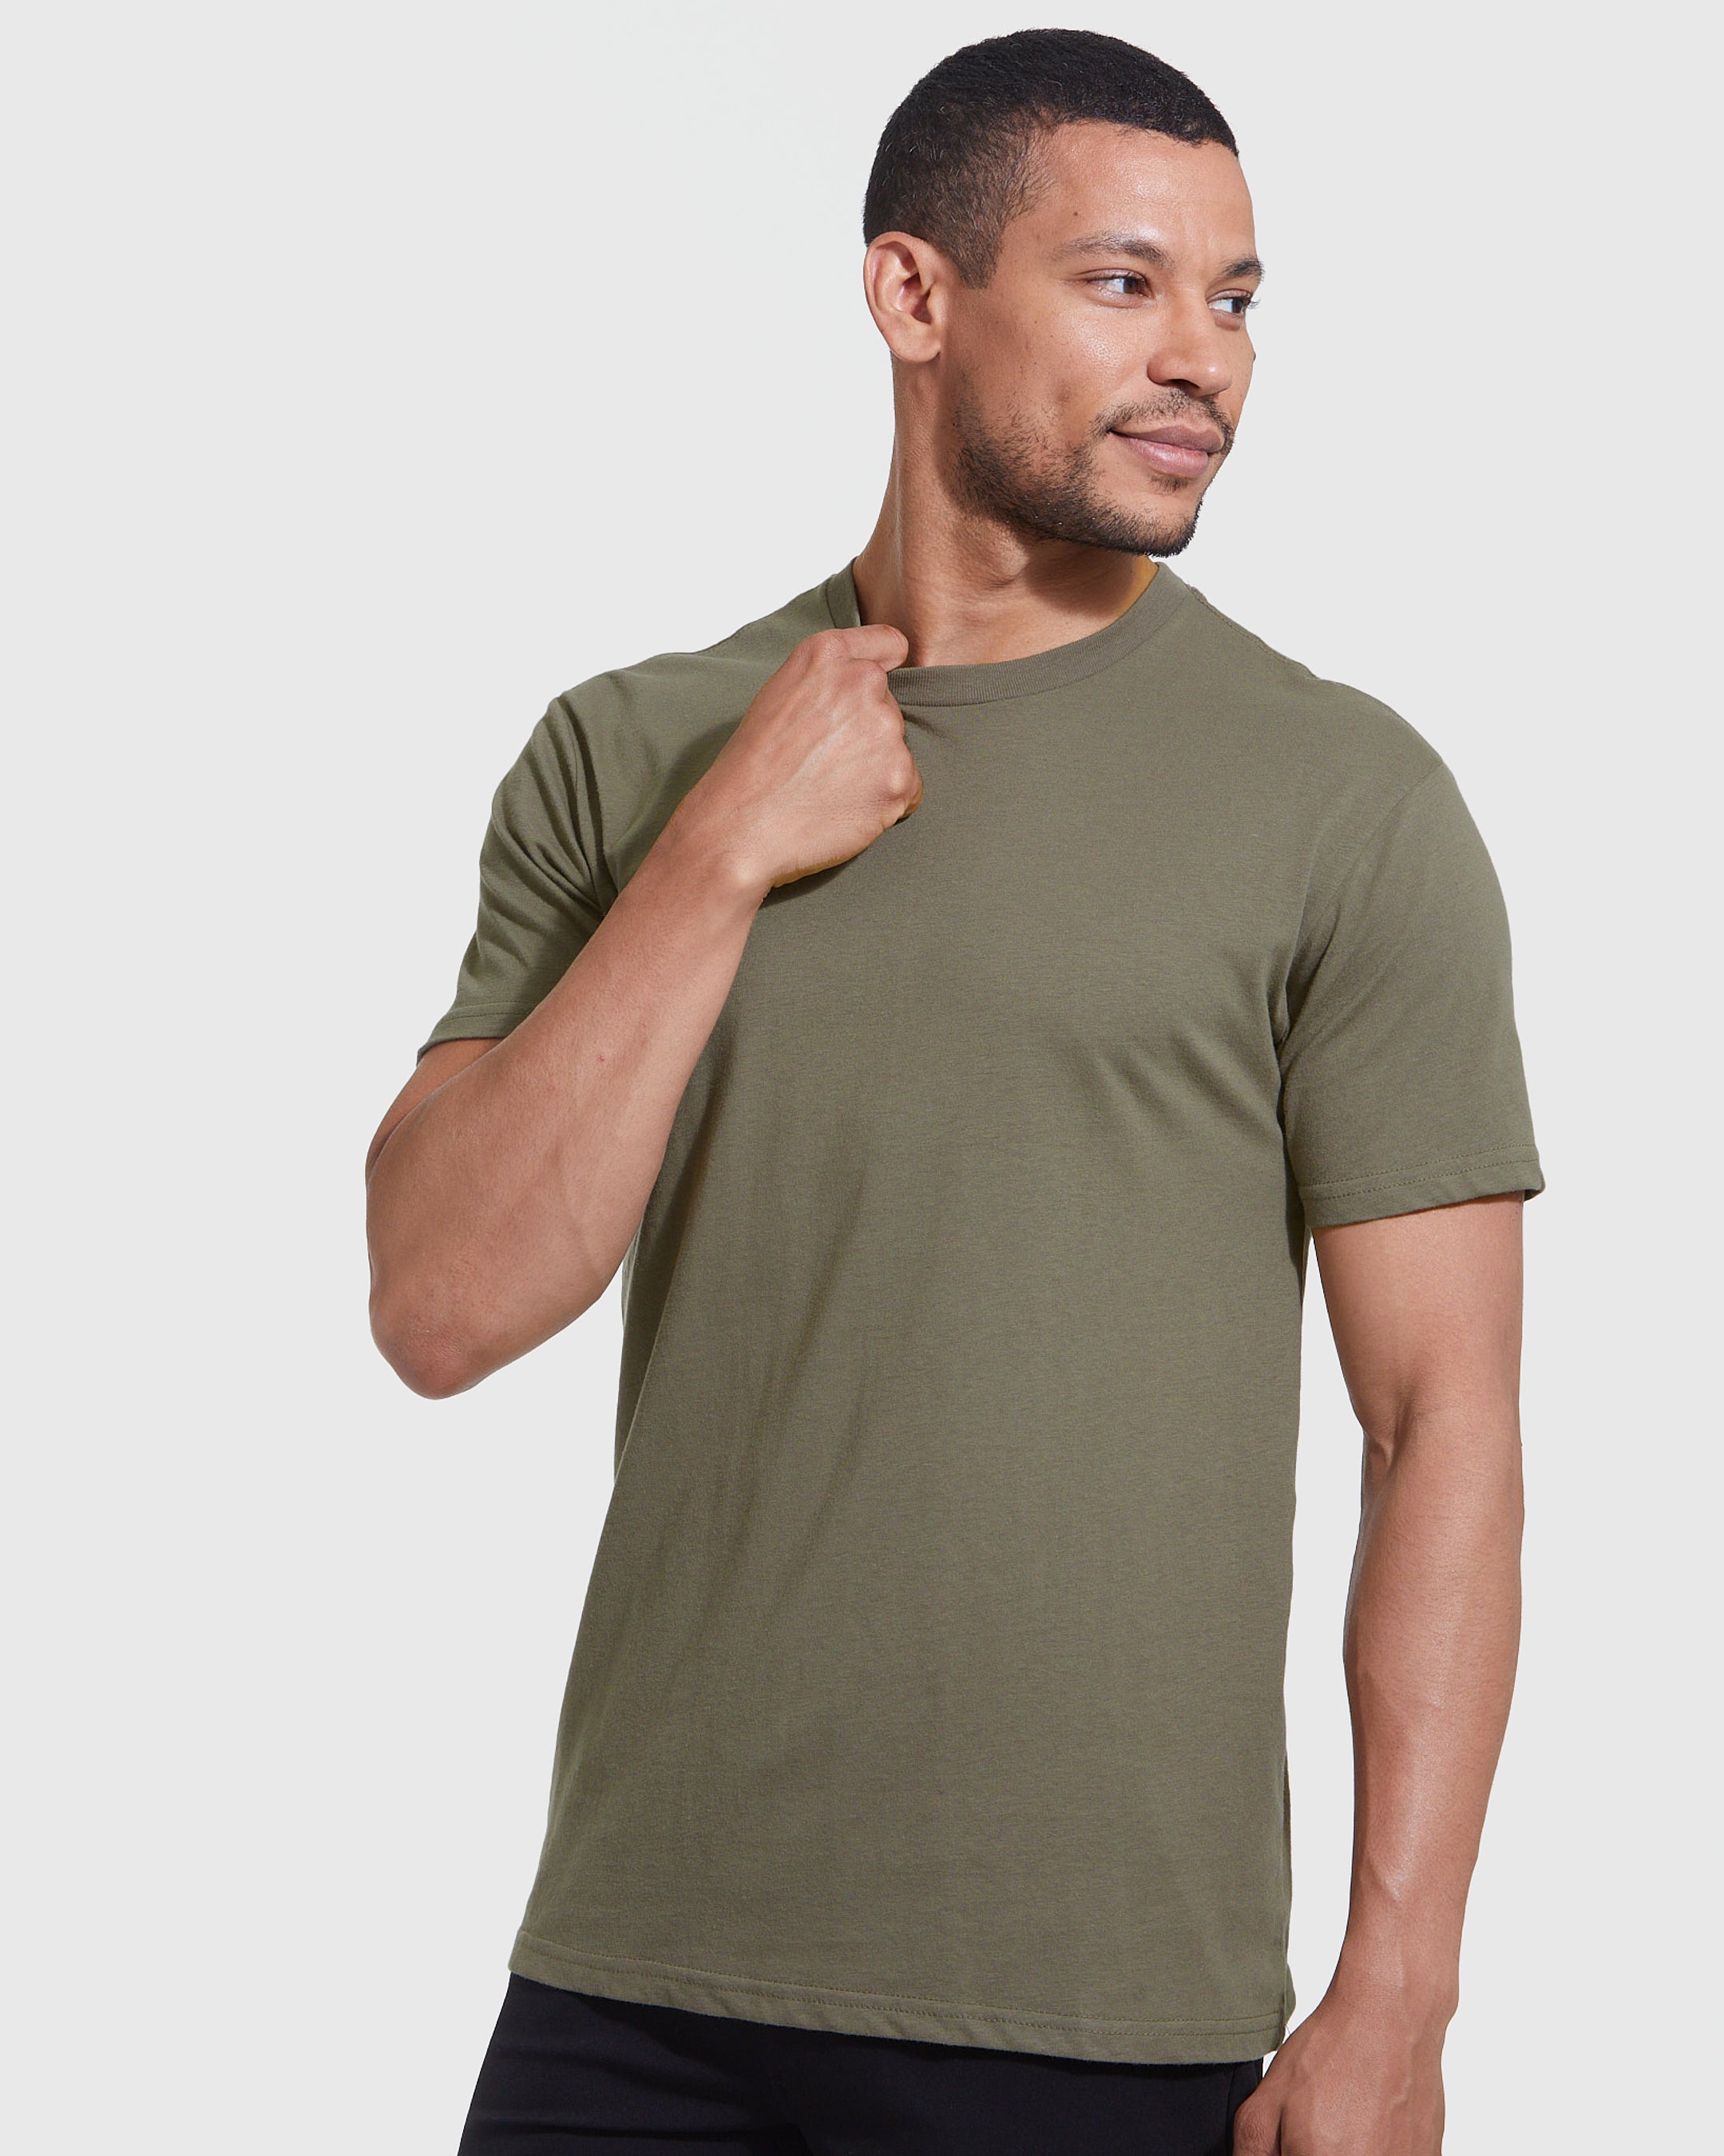 True Classic Tees Premium Fitted Men's T-Shirts - 4 Pack Crew Neck